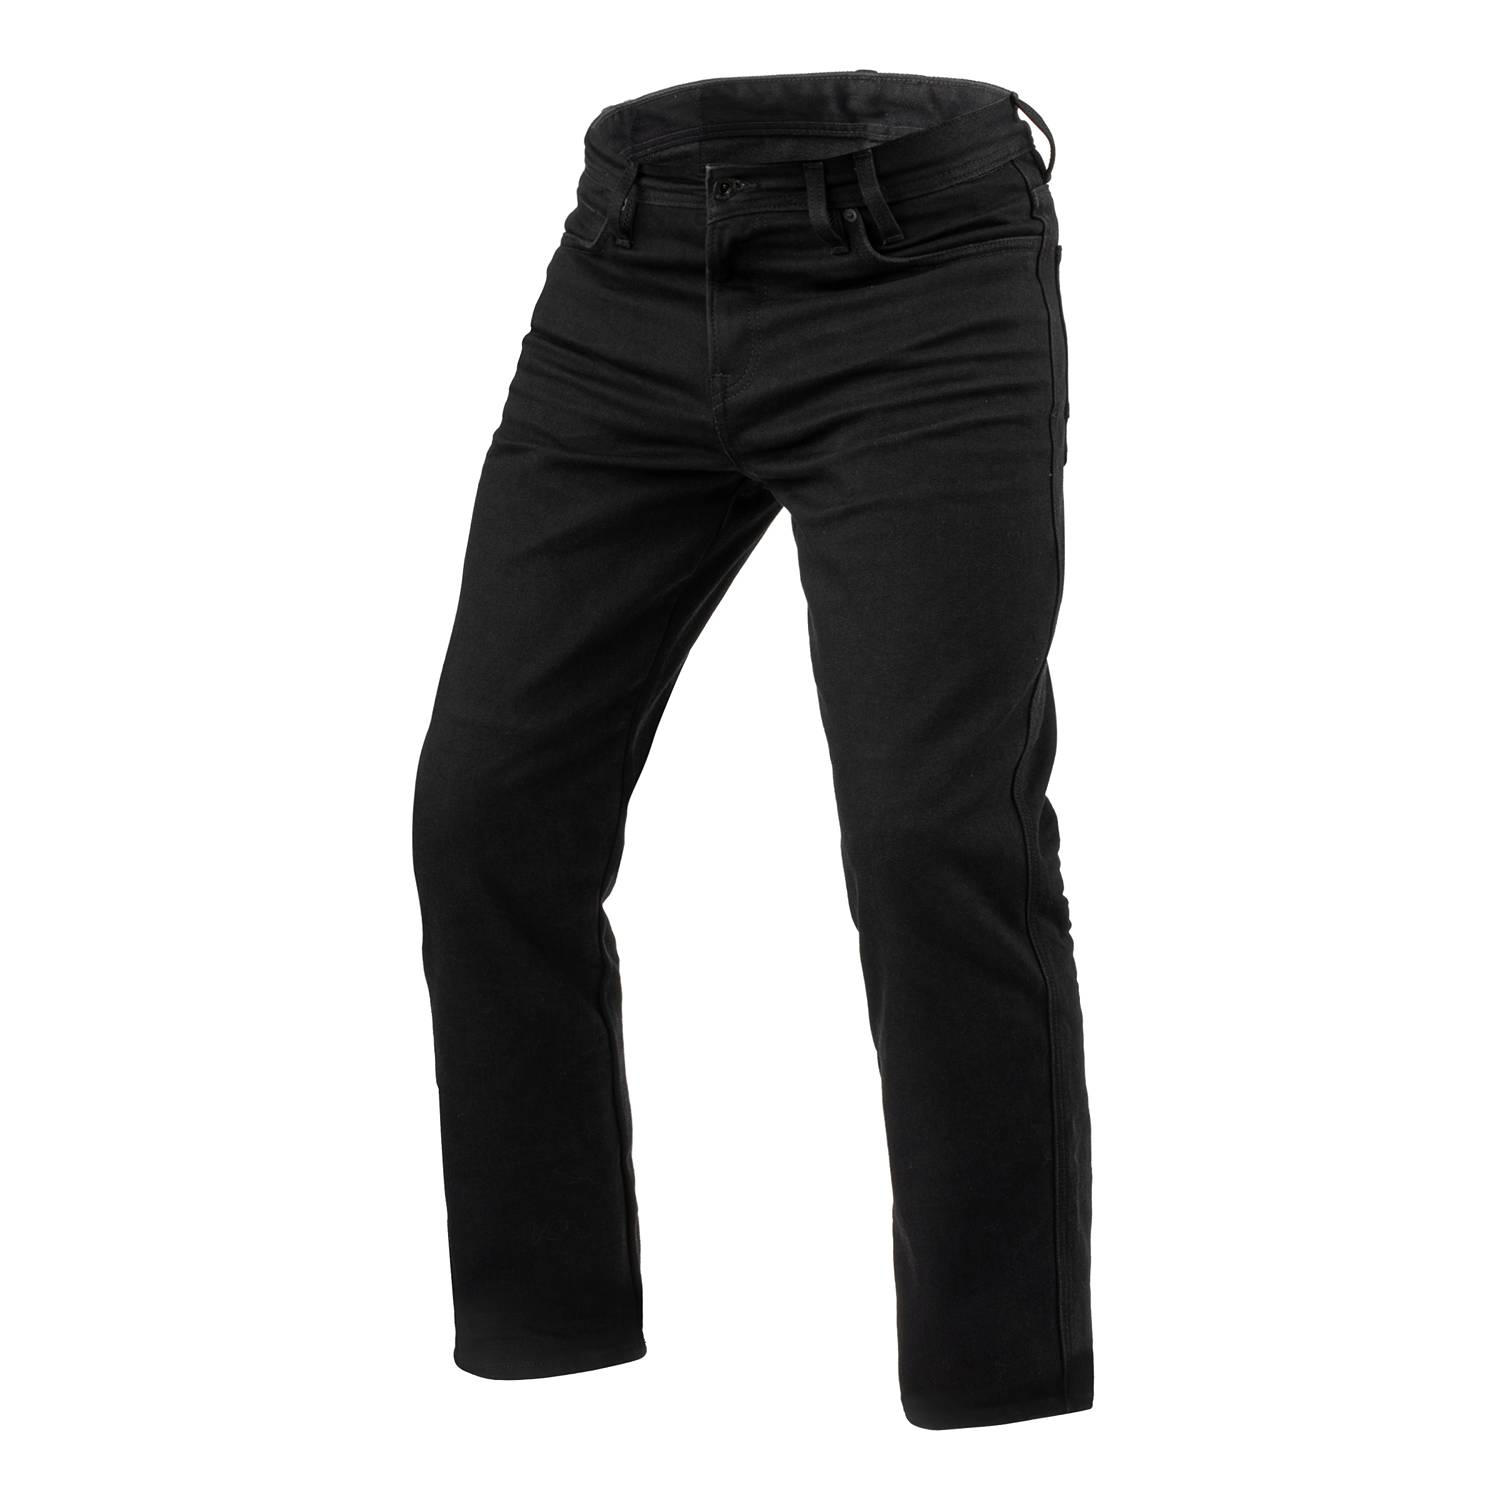 Image of REV'IT! Jeans Lombard 3 RF Black L36 Motorcycle Jeans Talla L36/W33